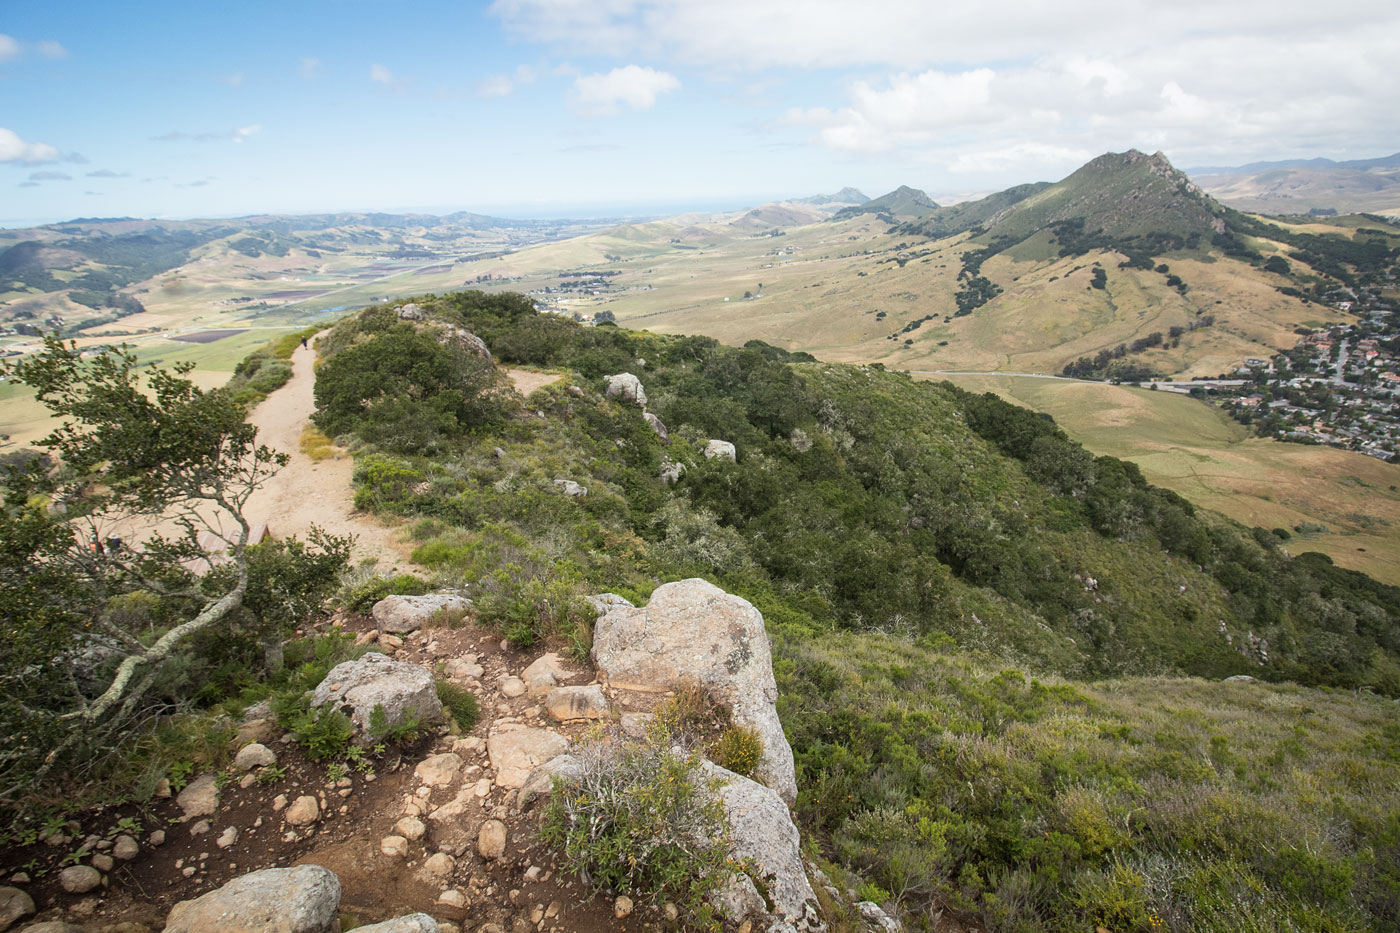 Hike Cerro San Luis Obispo in San Luis Obispo, California - Stav is Lost